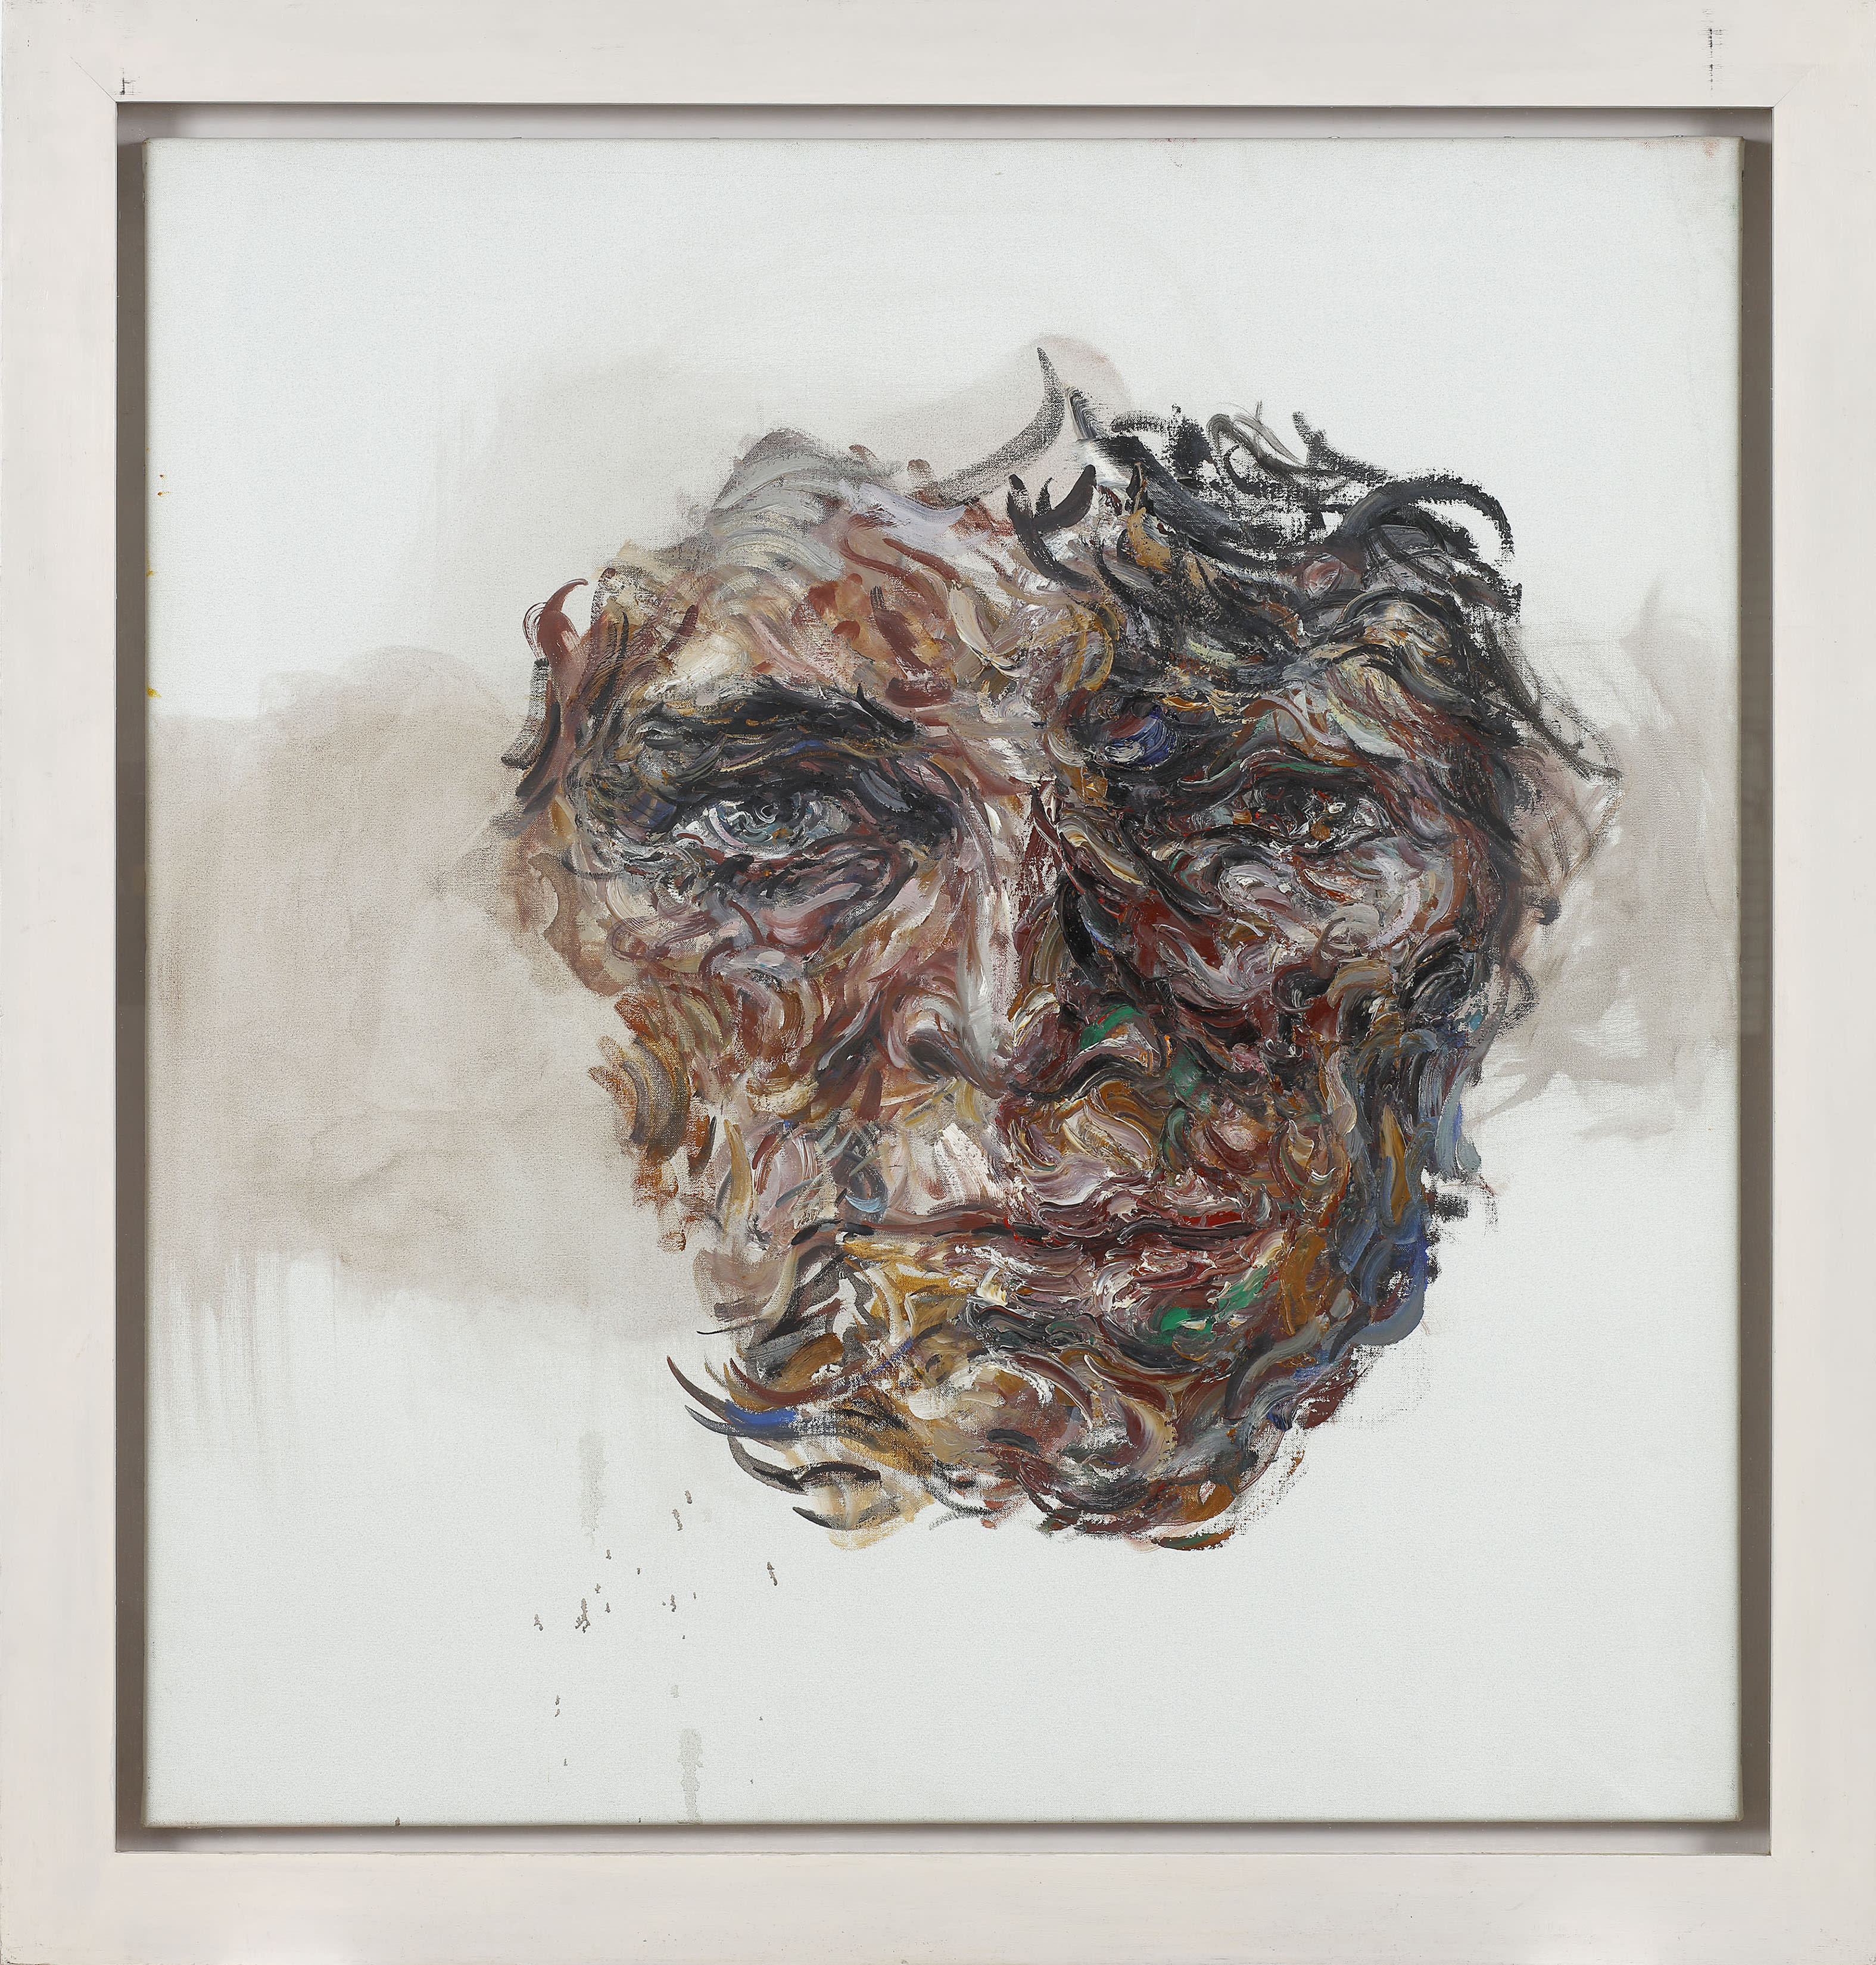 Maggi Hambling, Double Portrait, 2001-02. Courtesy of the artist and Marlborough Gallery, New York.